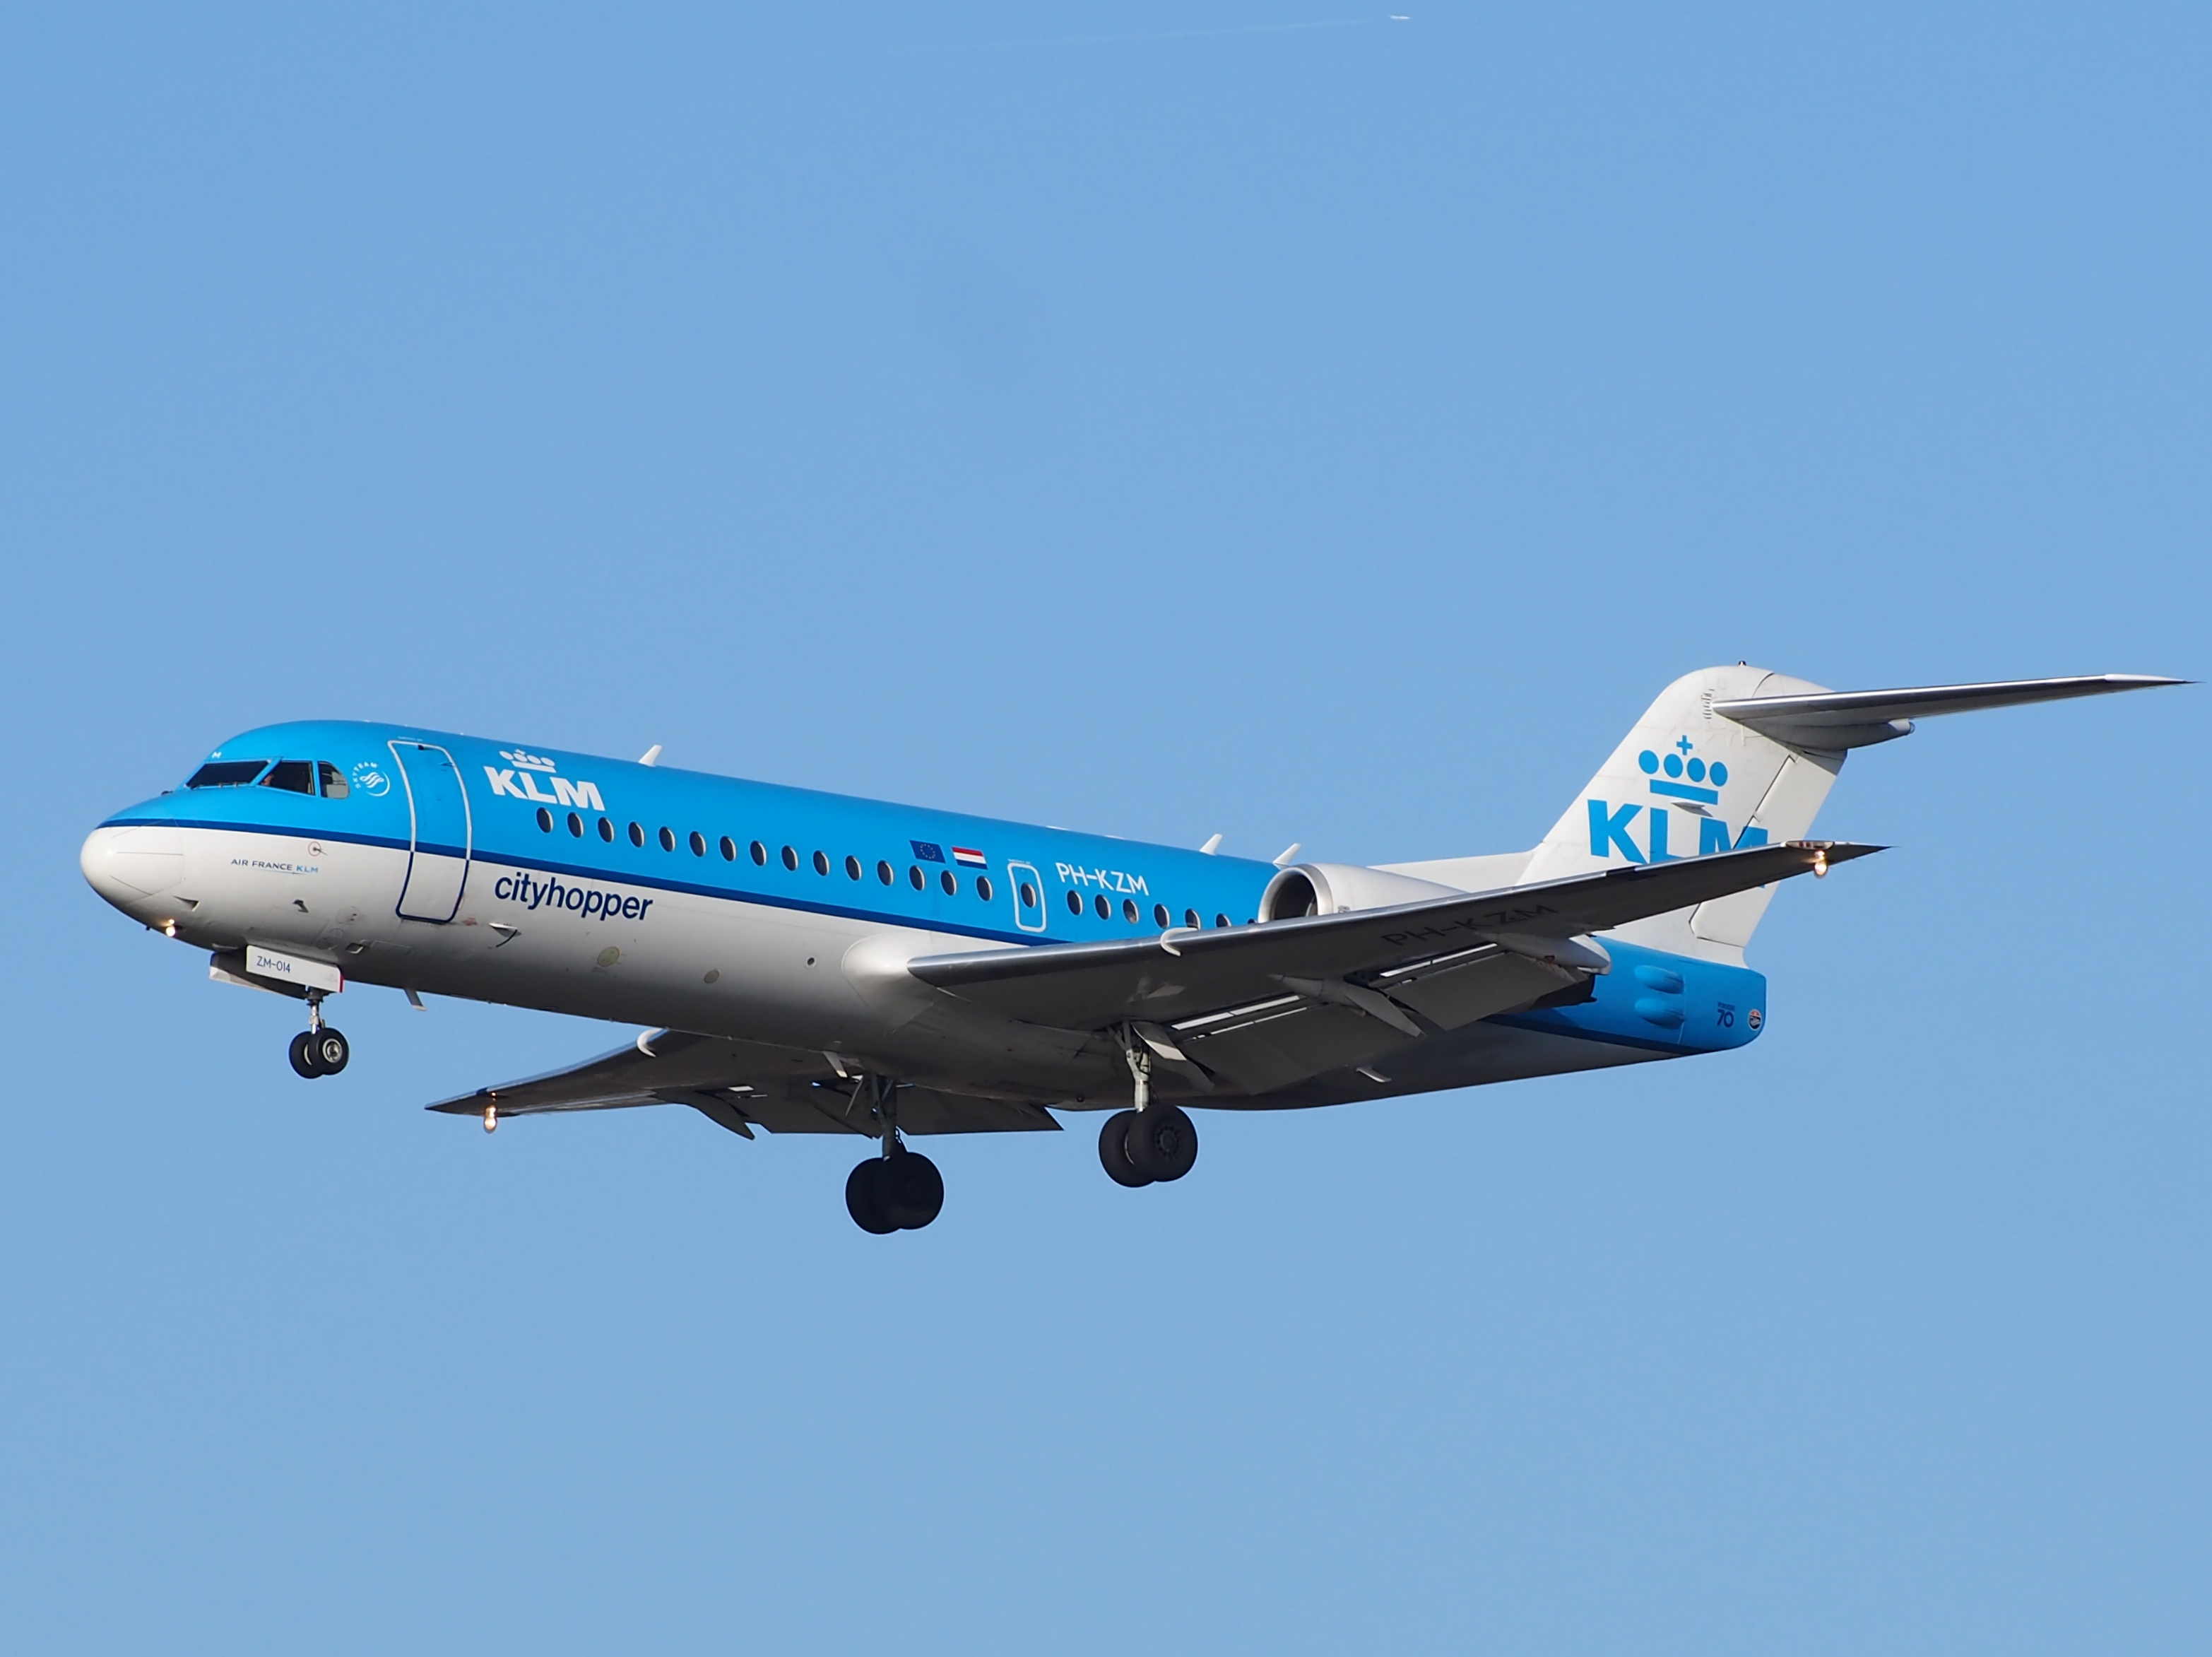 PH-KZM, landing at Schiphol on 2Feb2014 pic13